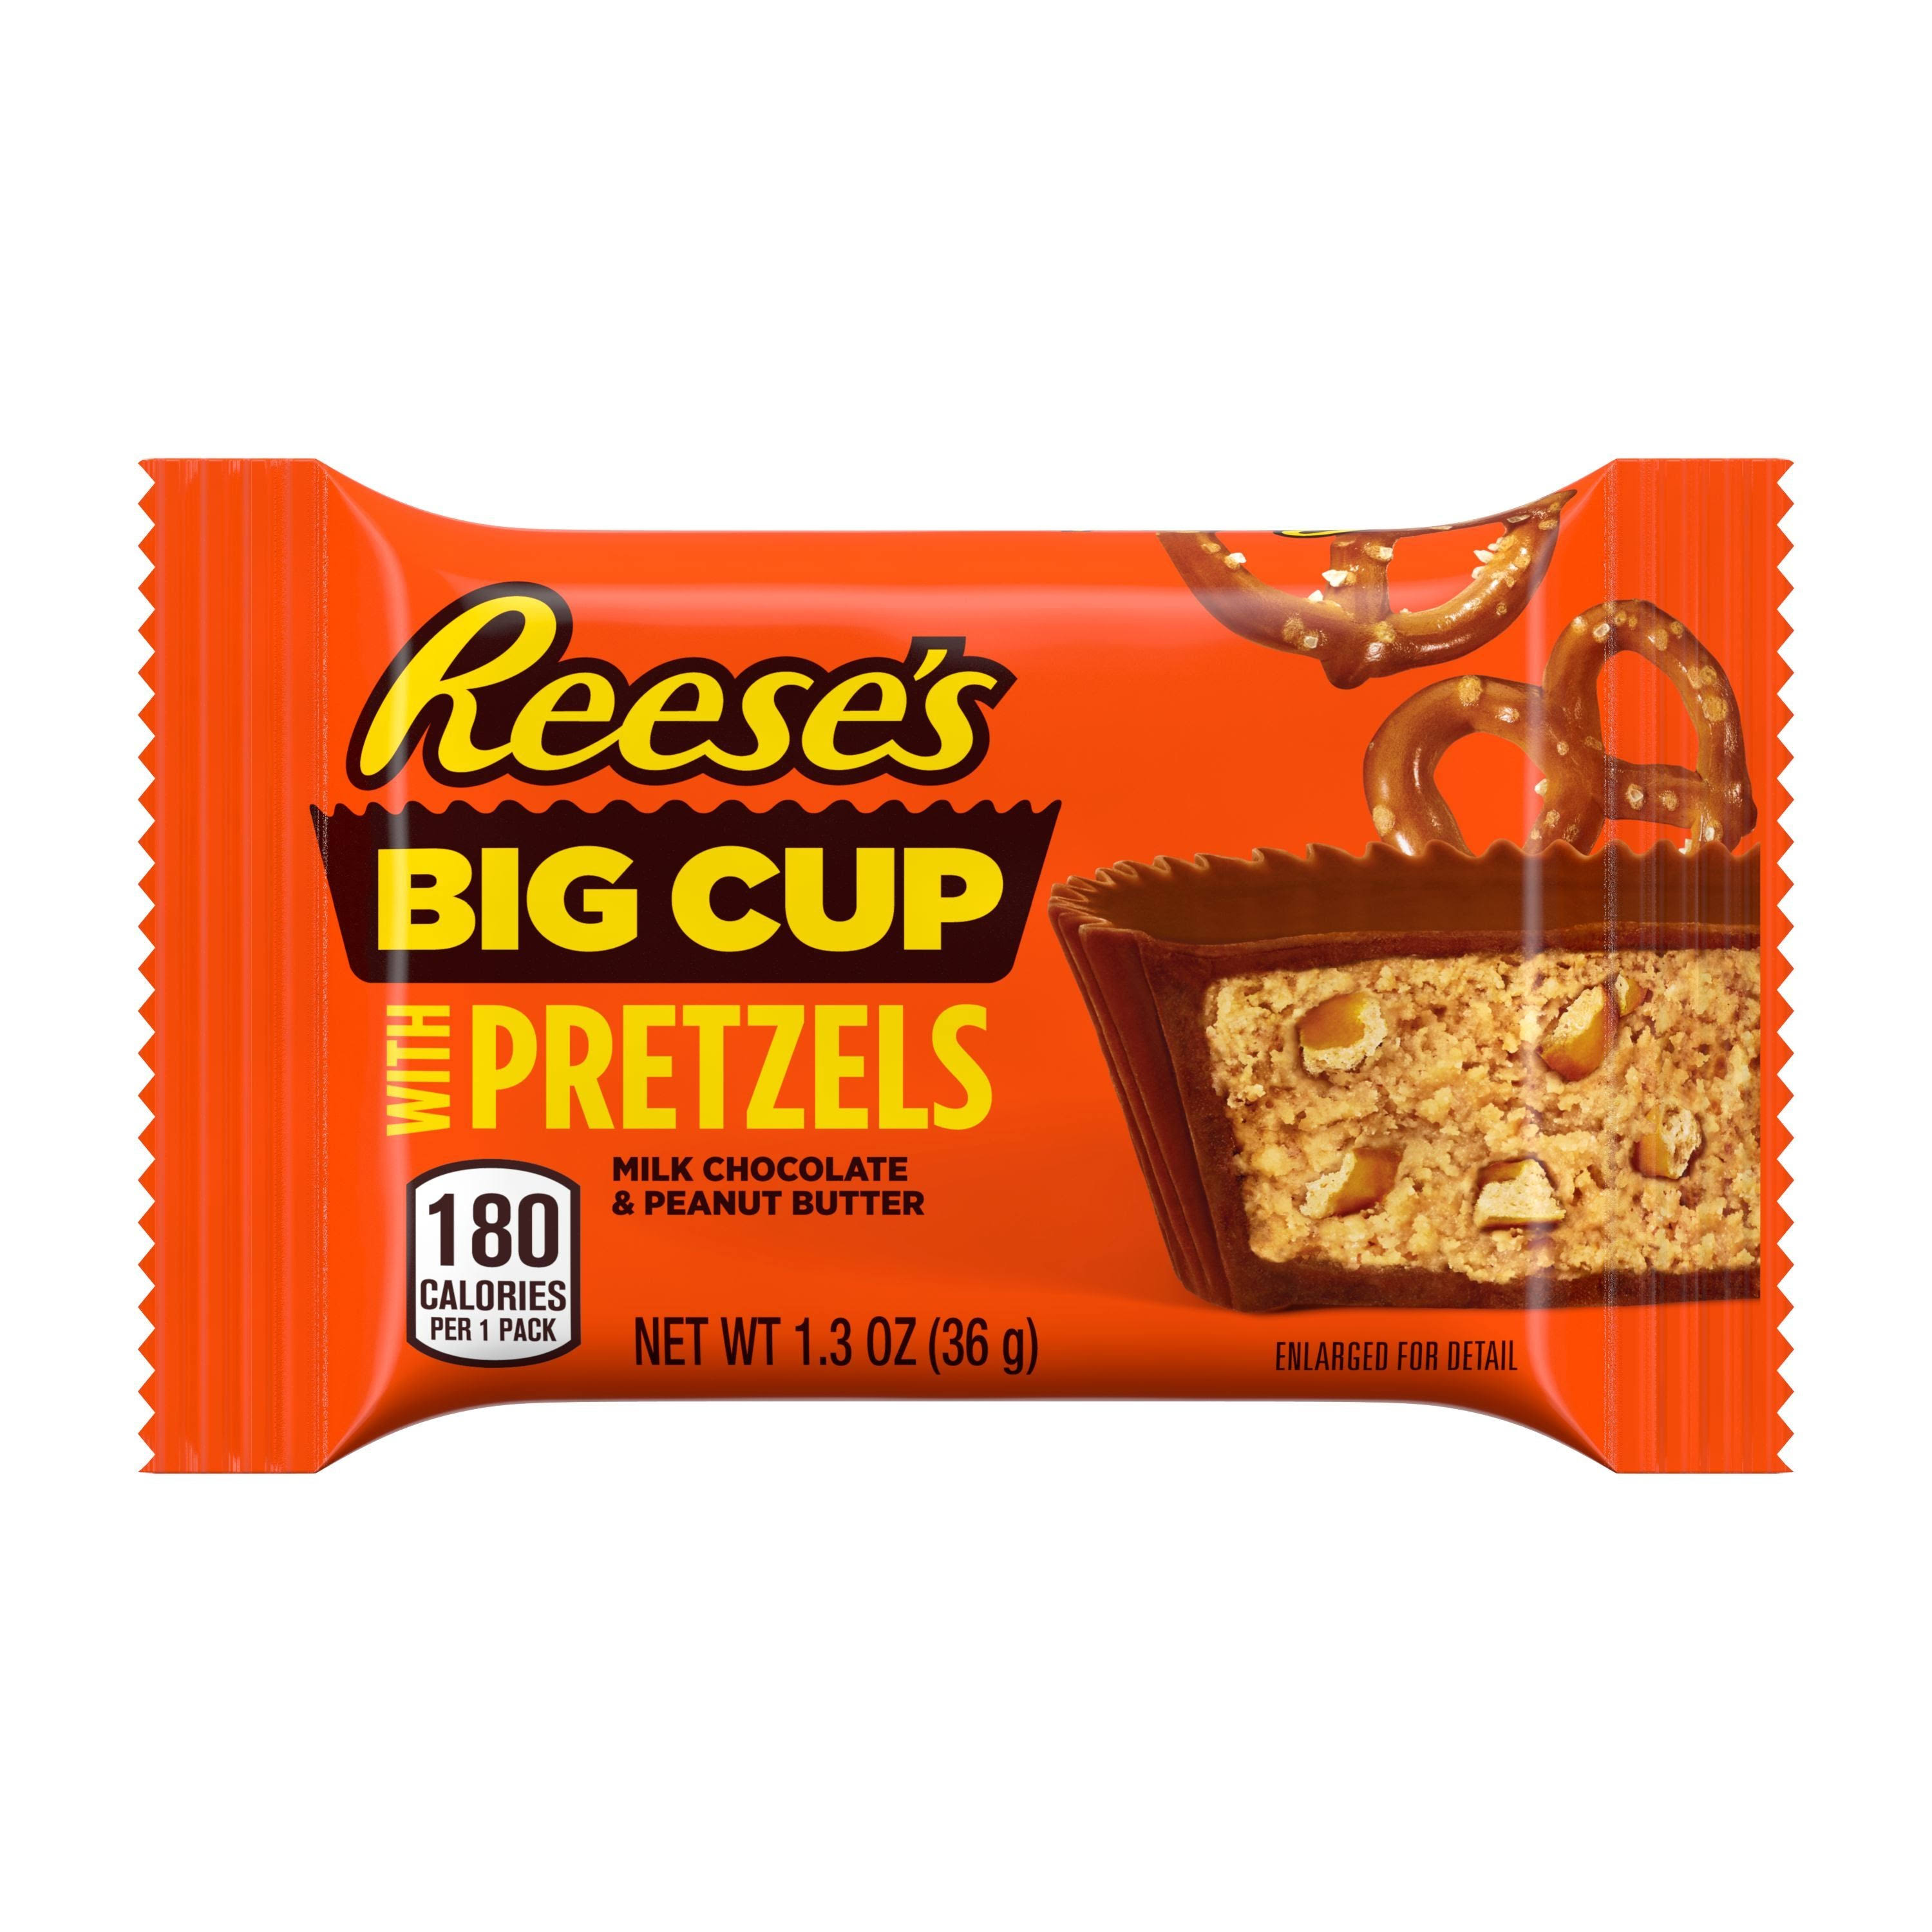 Reese's Milk Chocolate & Peanut Butter, Pretzels, Big Cup - 1.3 oz